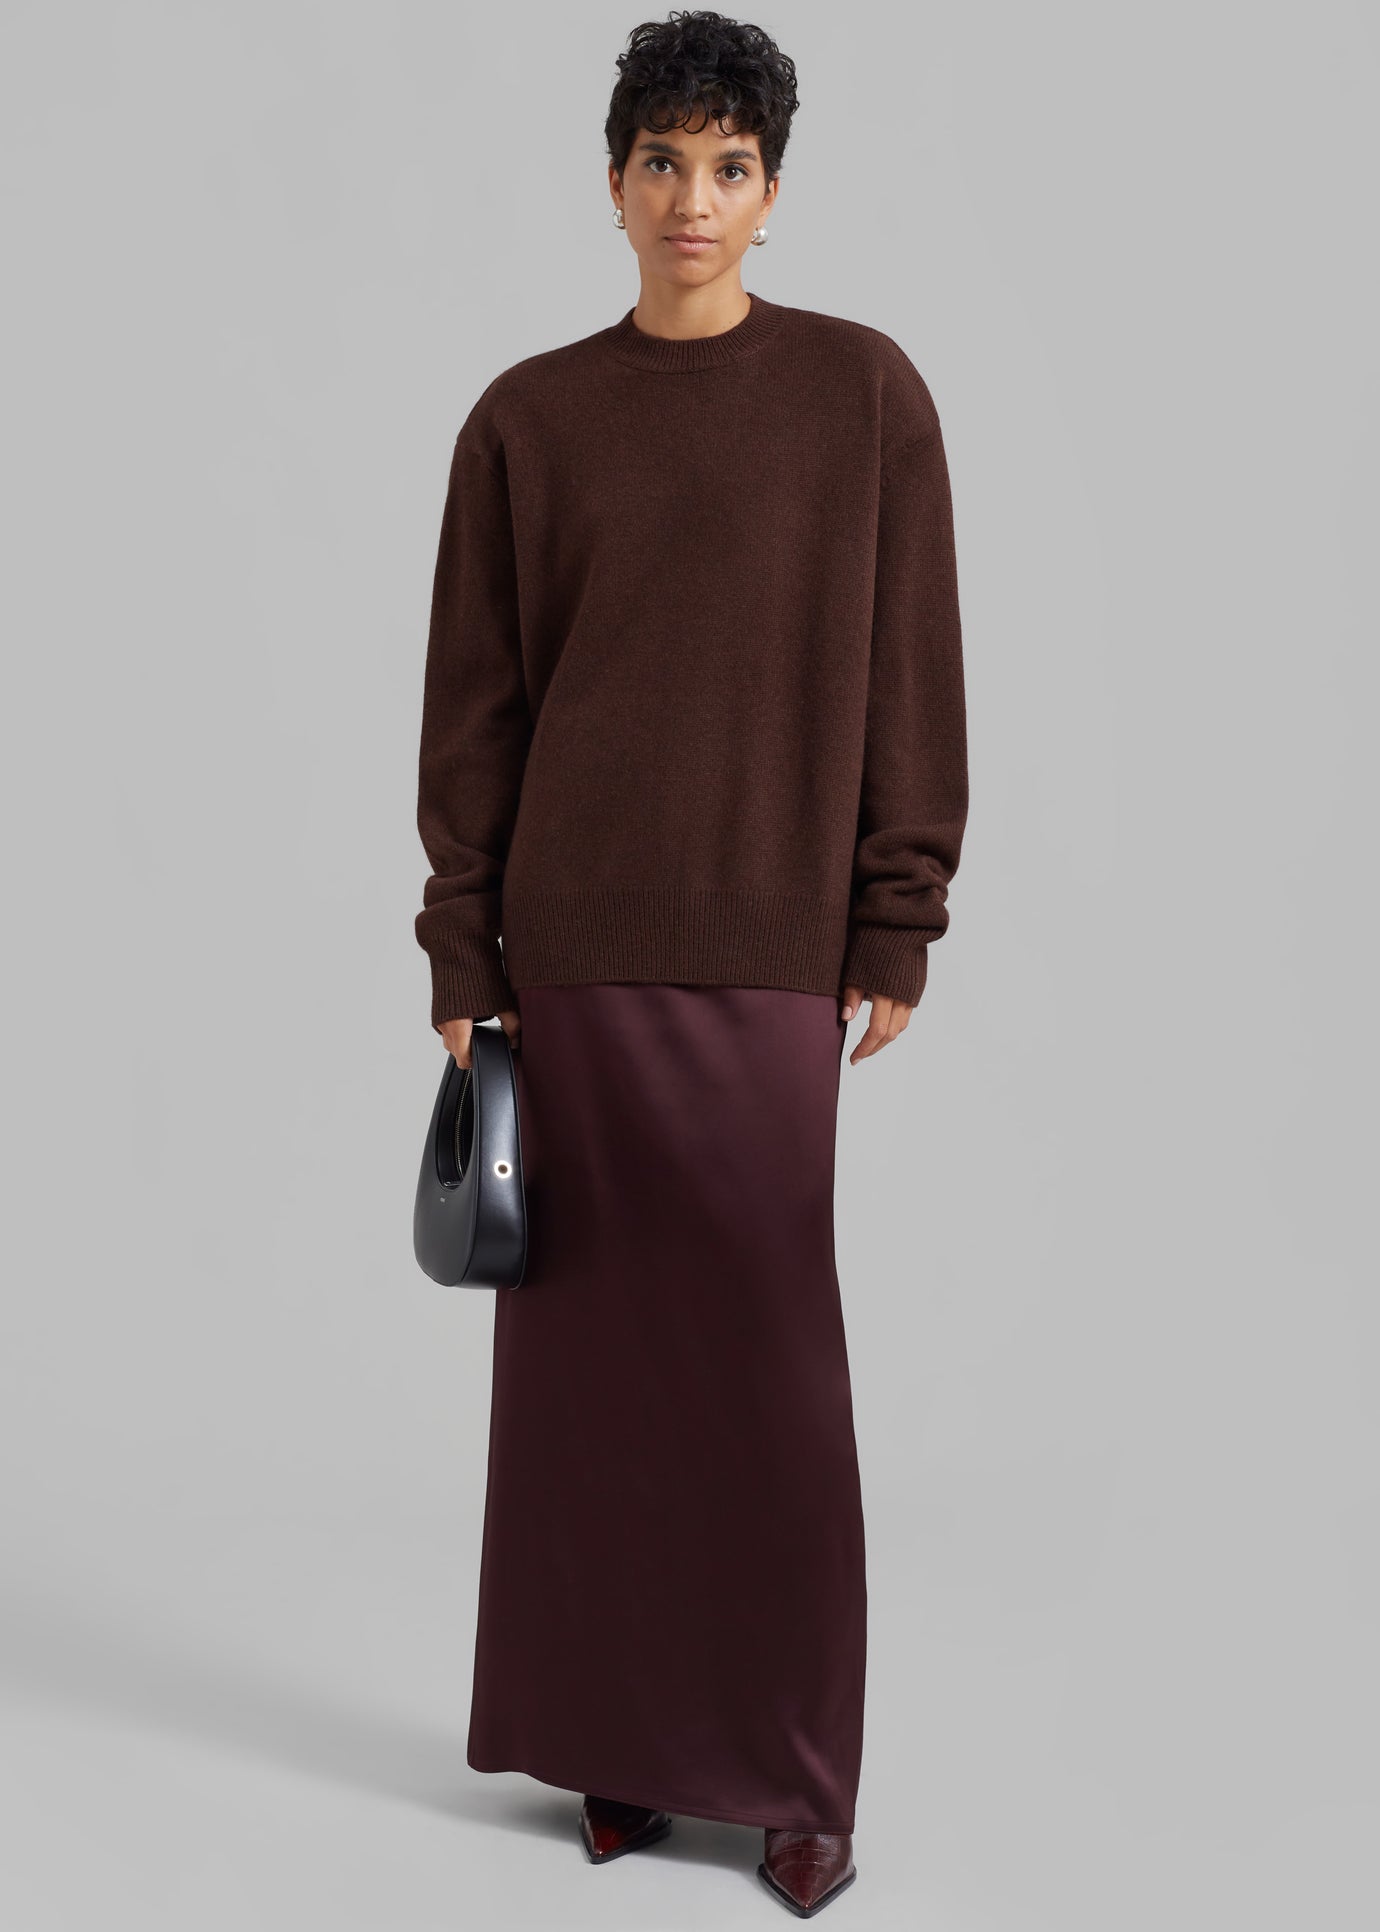 Bevza Ankle Length Skirt - Burgundy Brown